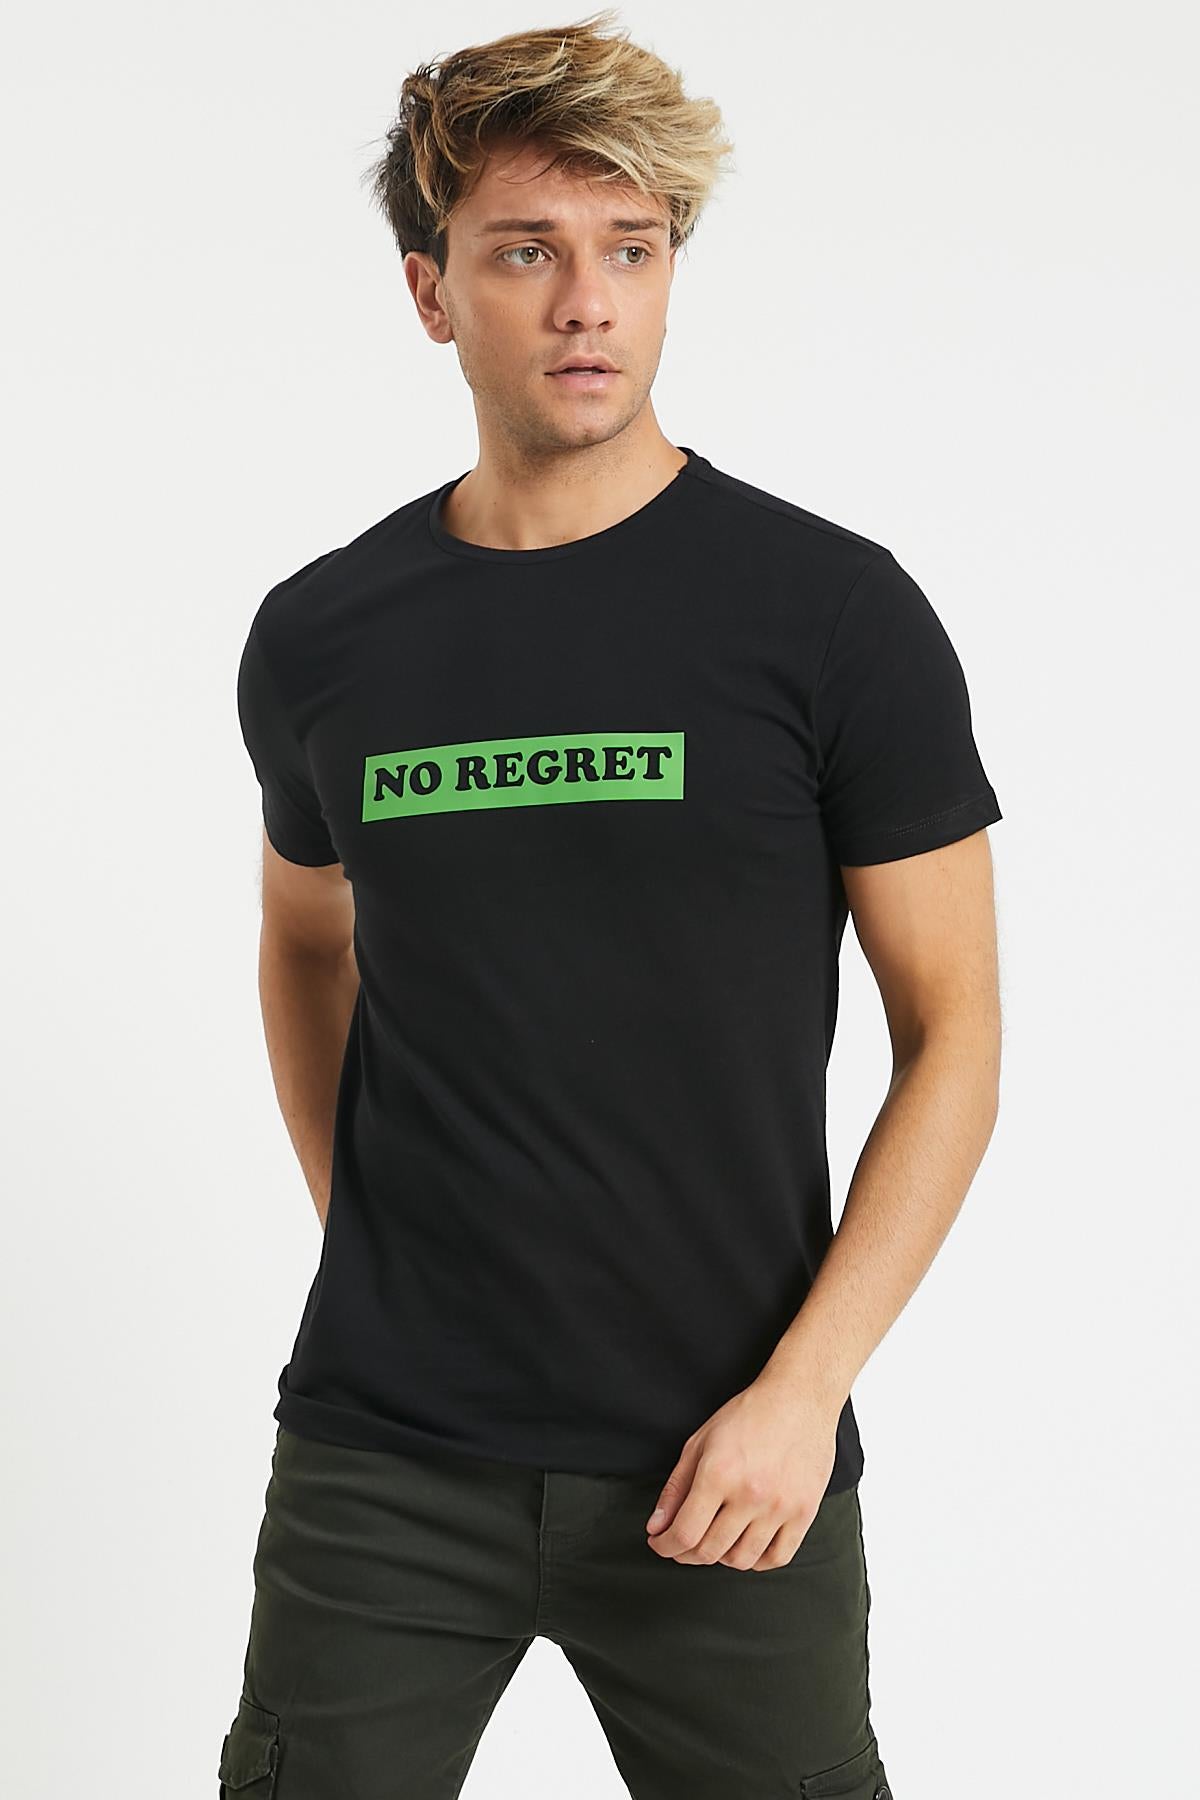 No Regret Graphic Printed, Cotton Crew Neck Men's T -shirt